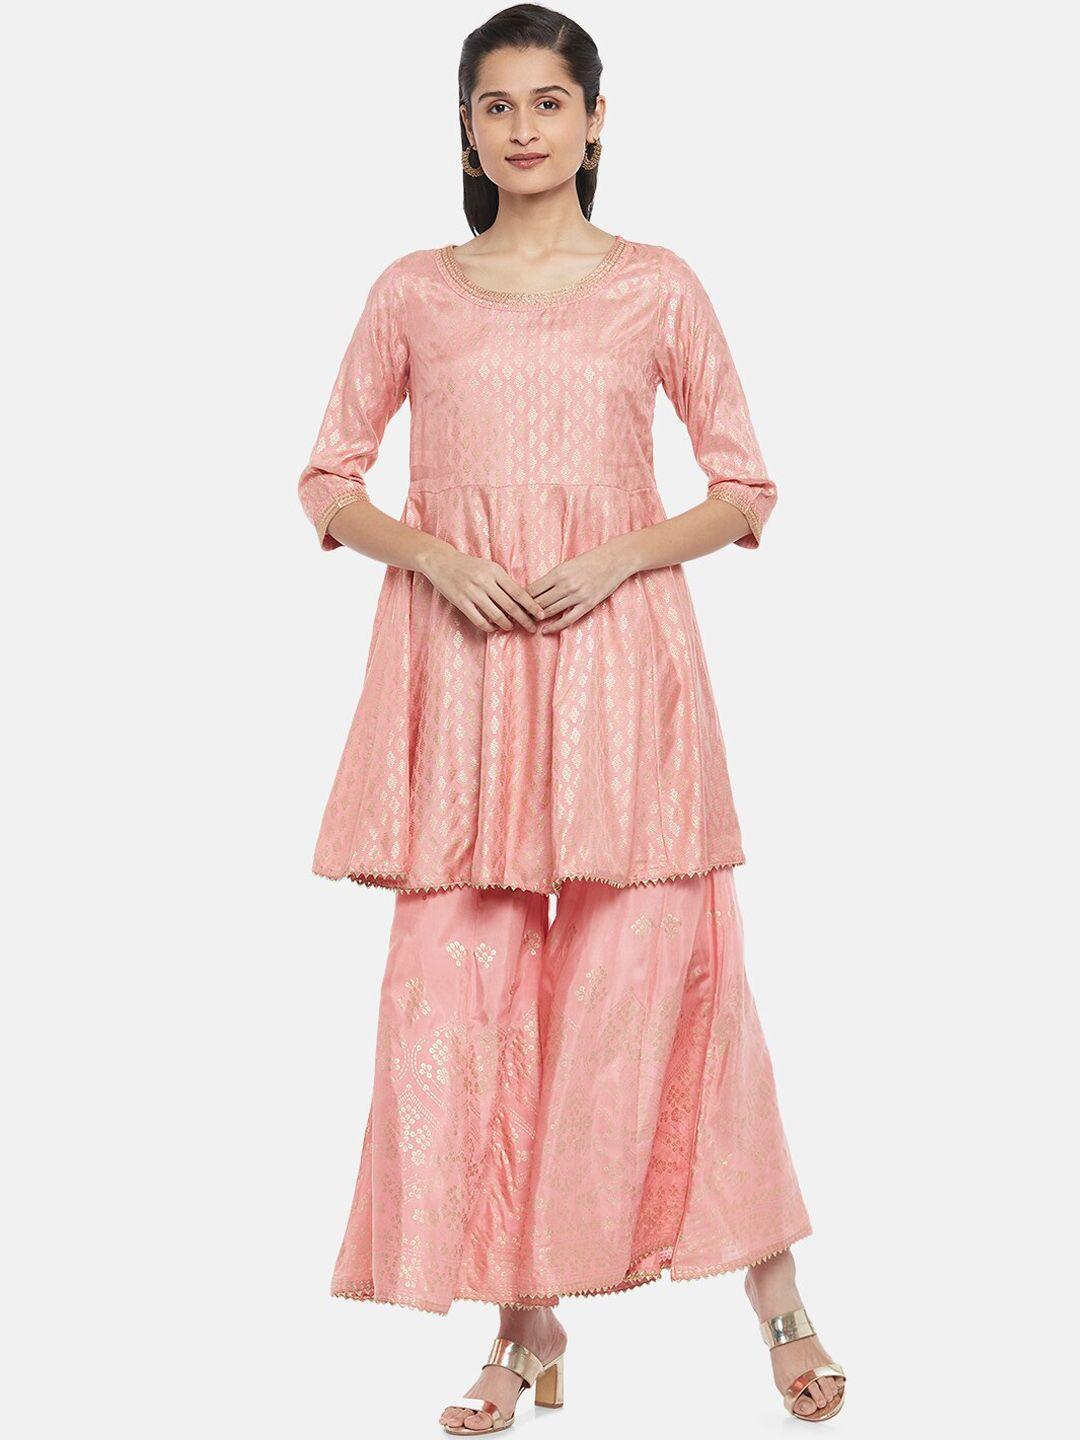 rangmanch by pantaloons women pink ethnic motifs printed pure cotton kurti with sharara & with dupatta